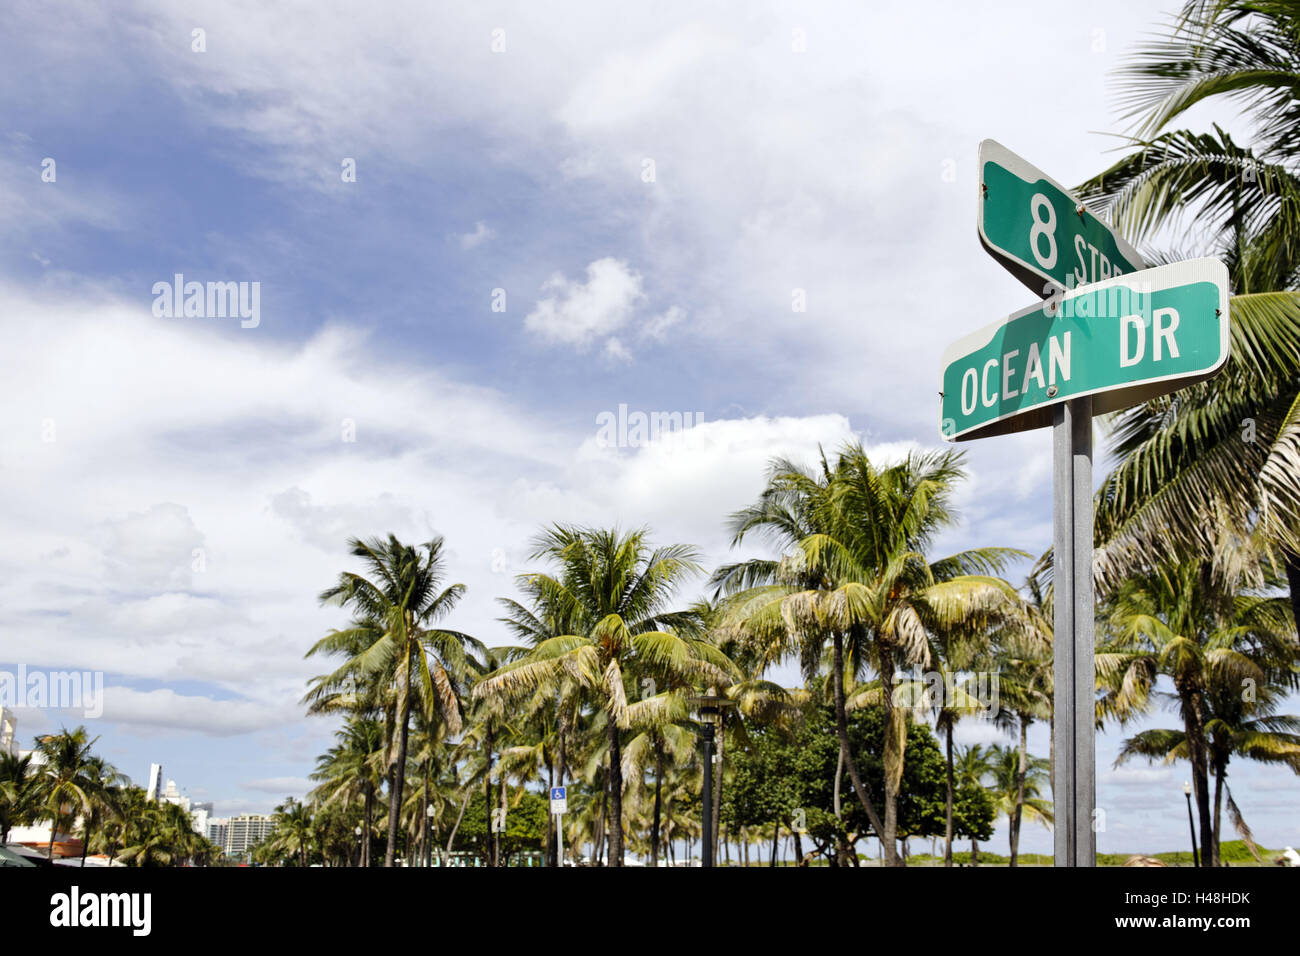 Road sign 'OCEAN DR' corner 8 ST, Lummus Park, Ocean Drive, Miami South Beach, Art Deco District, Florida, USA, Stock Photo